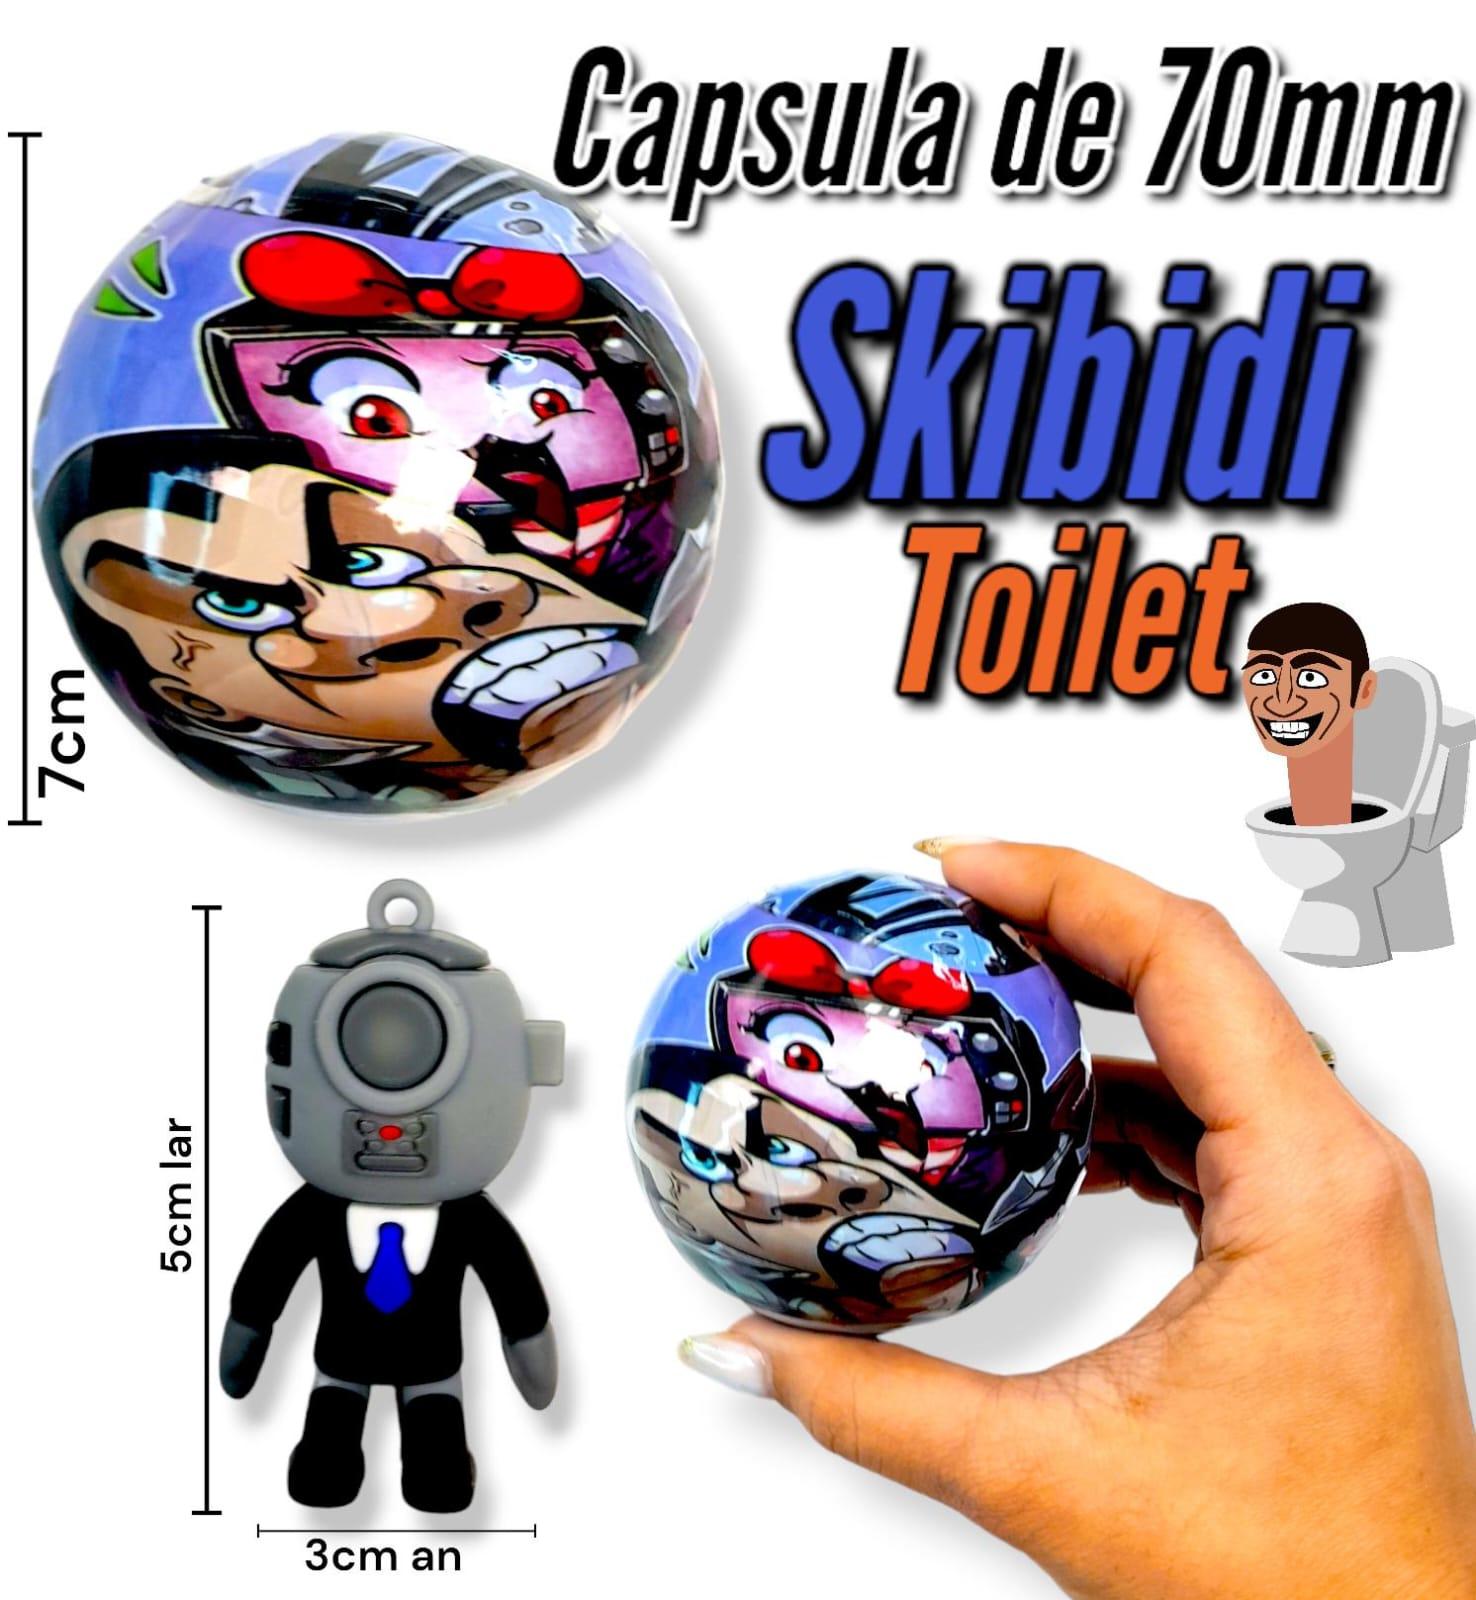 Capsula de 70mm Skibidi Toilet 